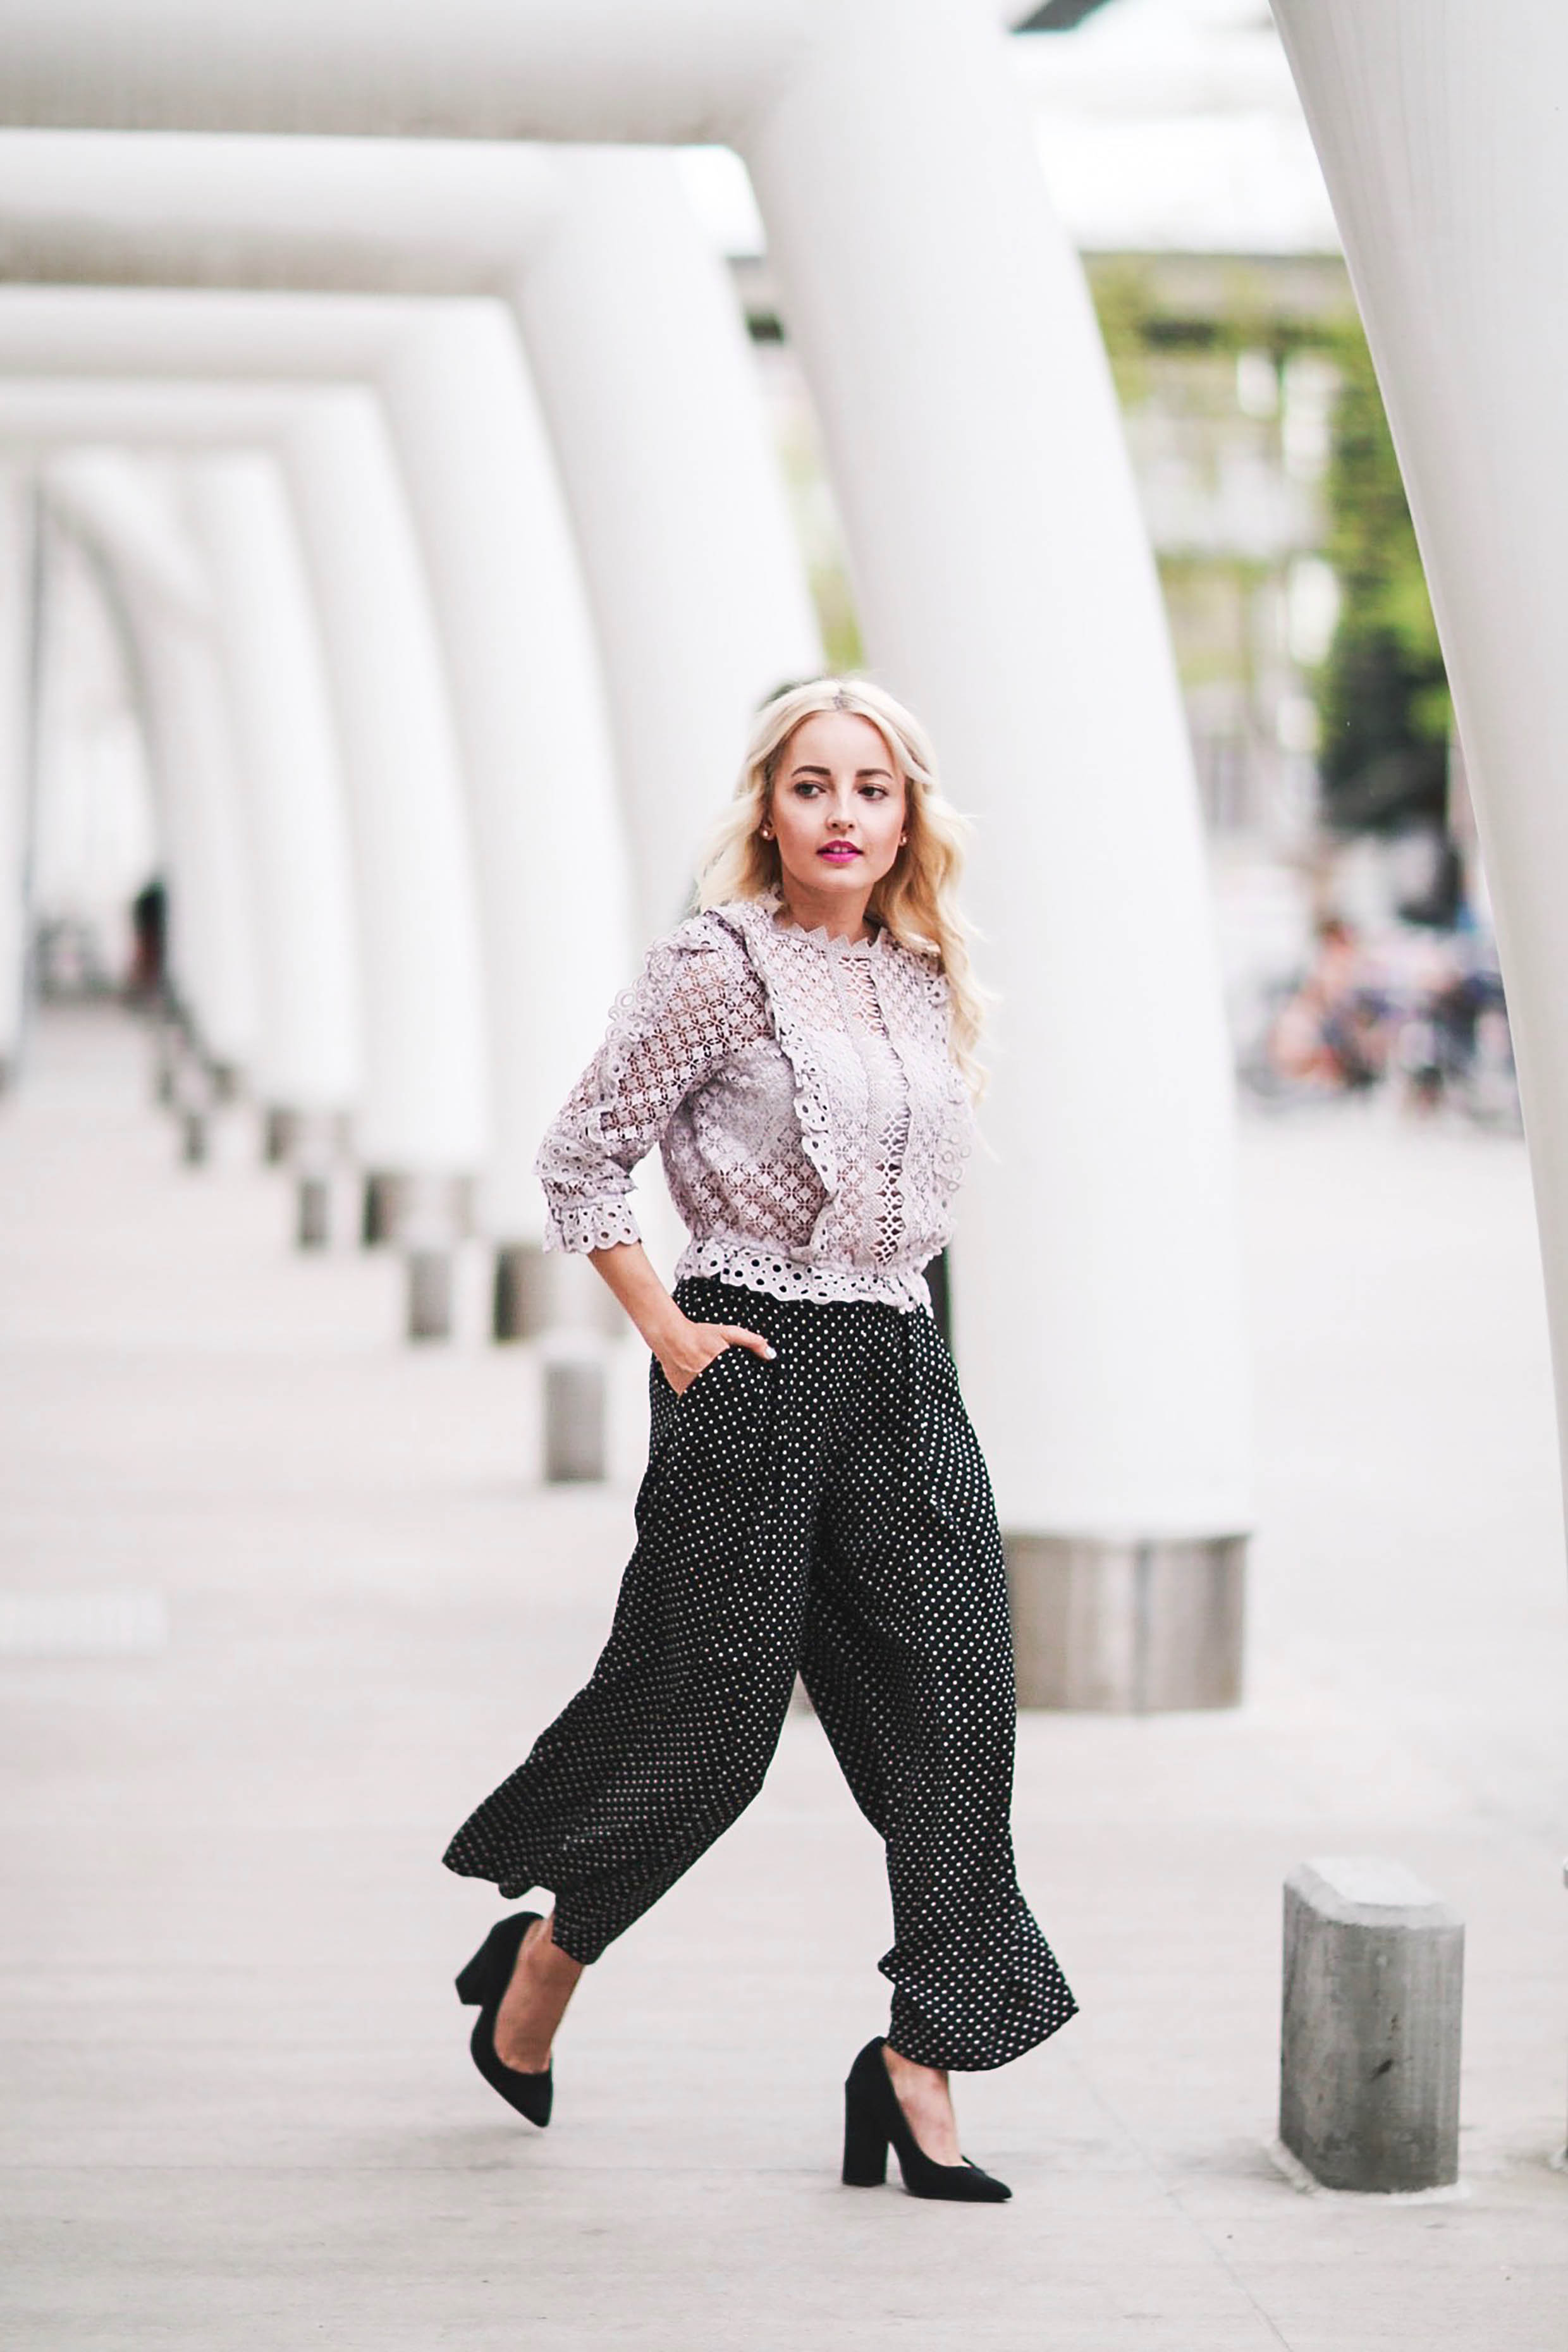 Alena Gidenko of modaprints.com styles polka dot trousers